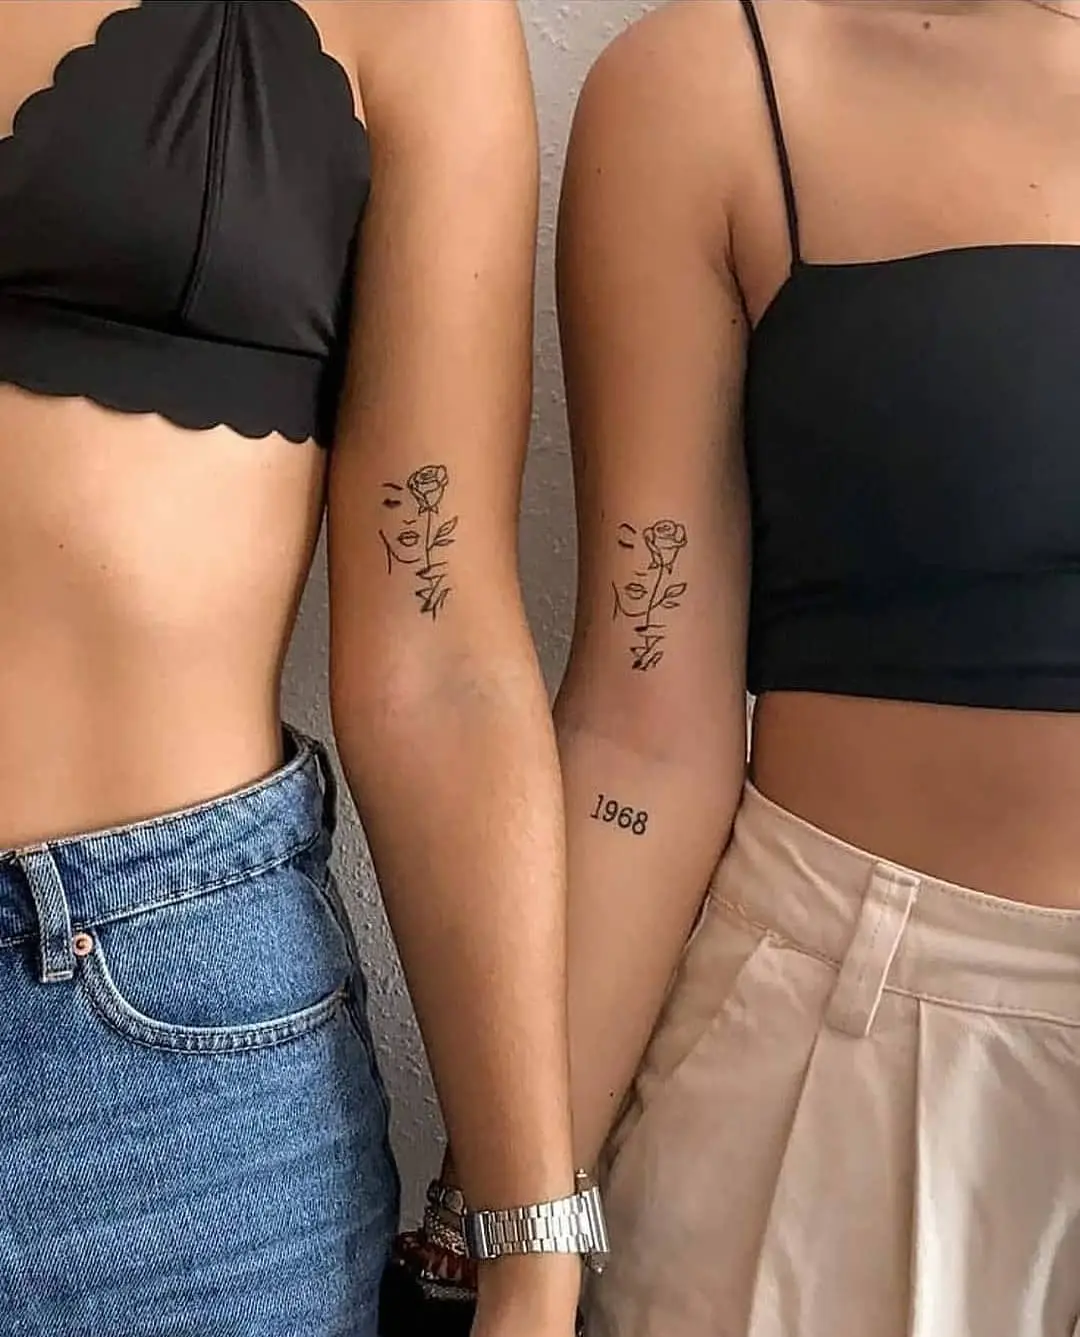 Tattoo ideas for women